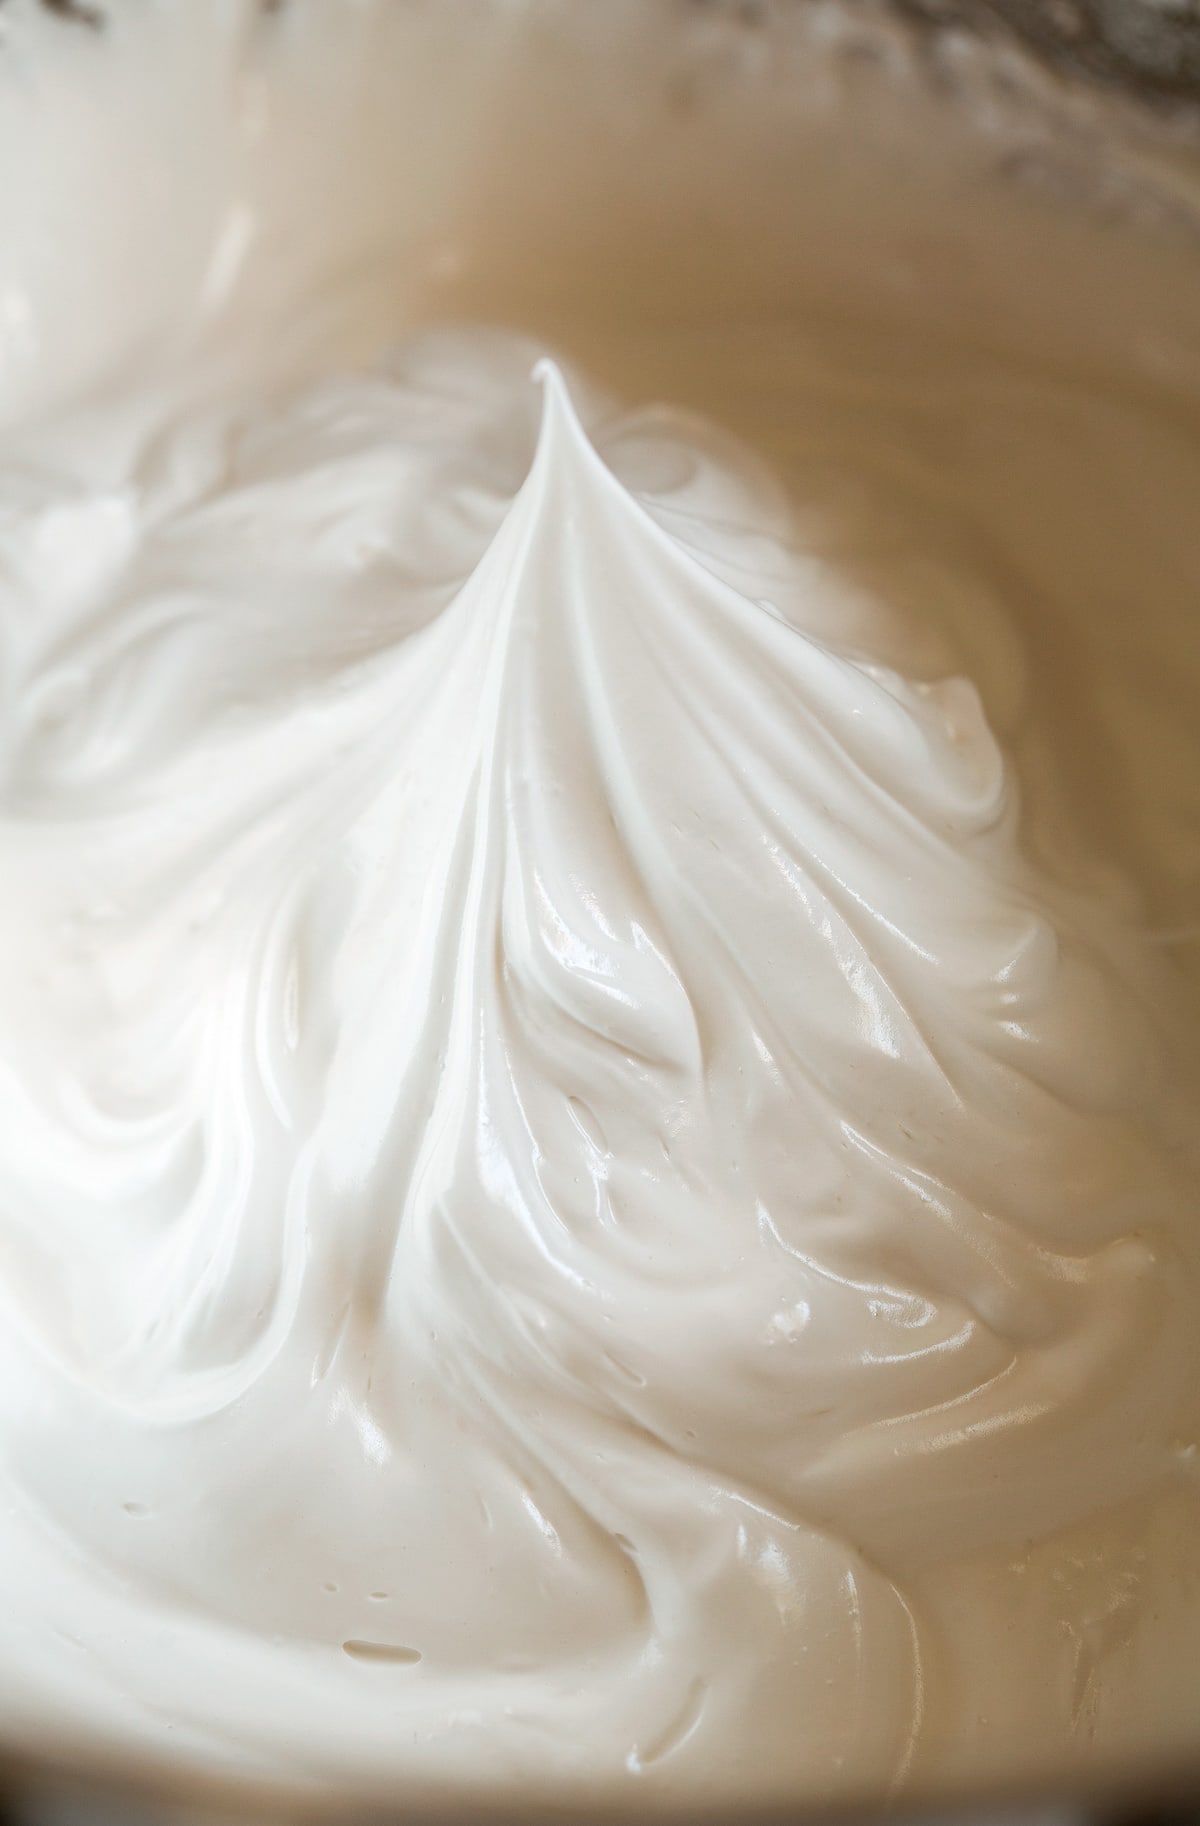 Image showing what a stiff peak is in meringue.